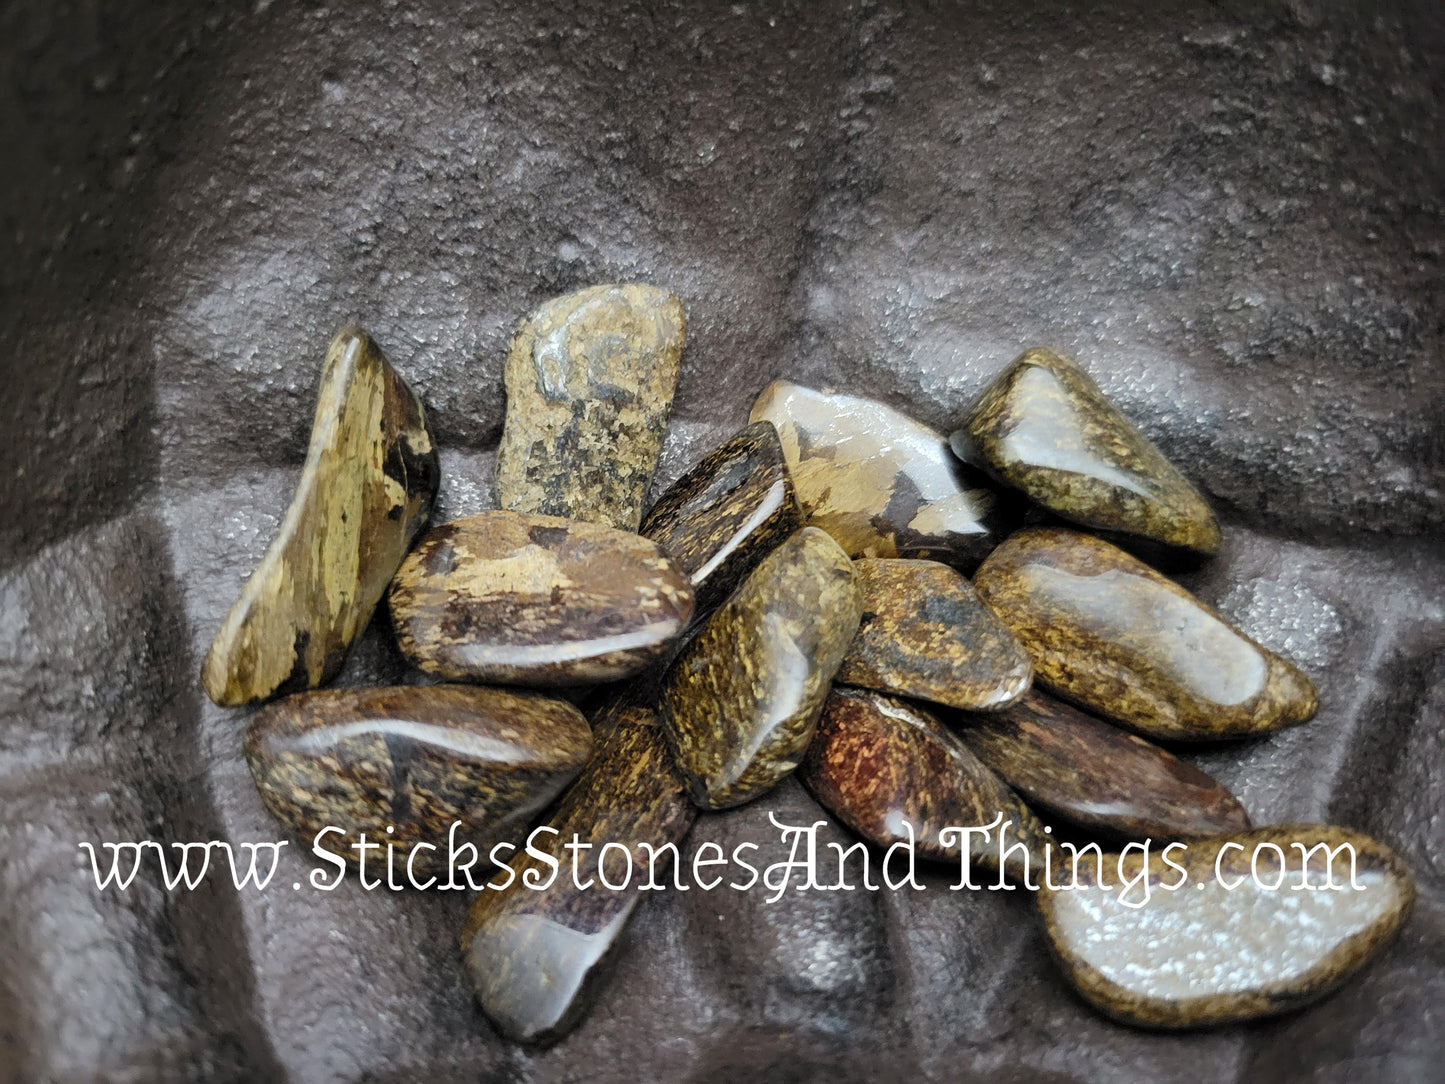 Bronzite Tumbled Stone 1-1.25 inches